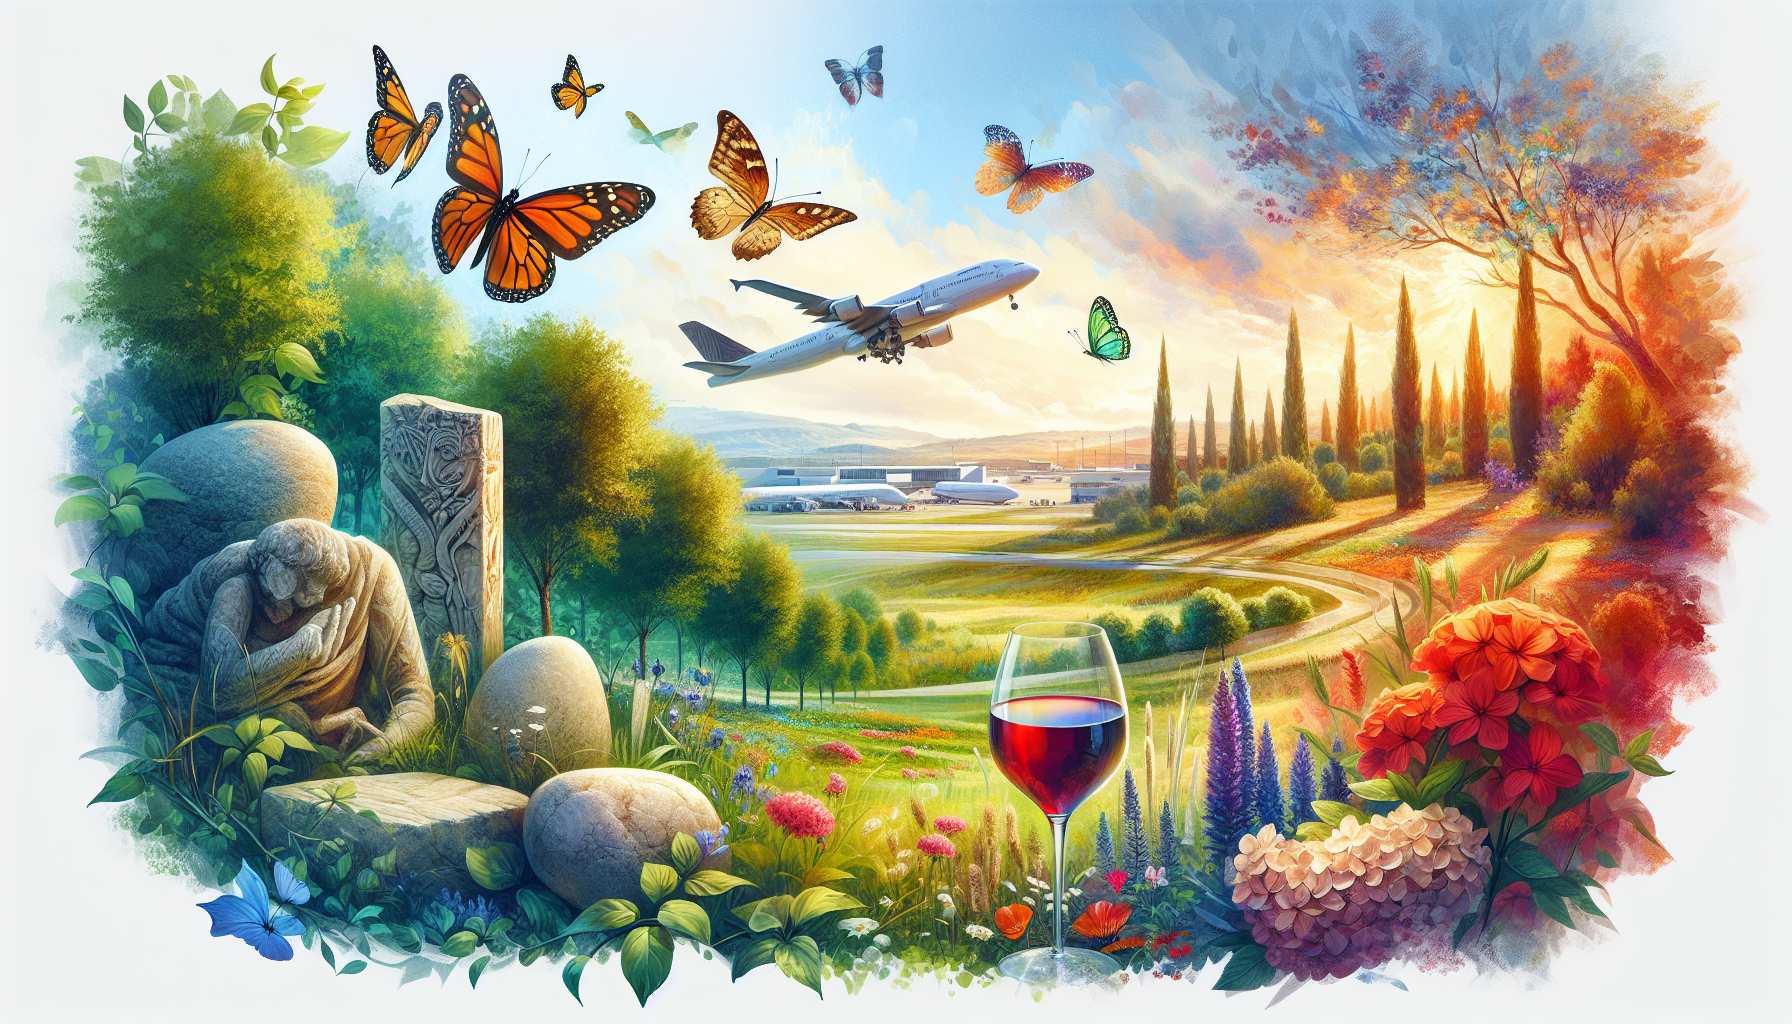 Serene spots near Auckland Airport: butterflies, ancient stones, green parks, florals, wine glasses